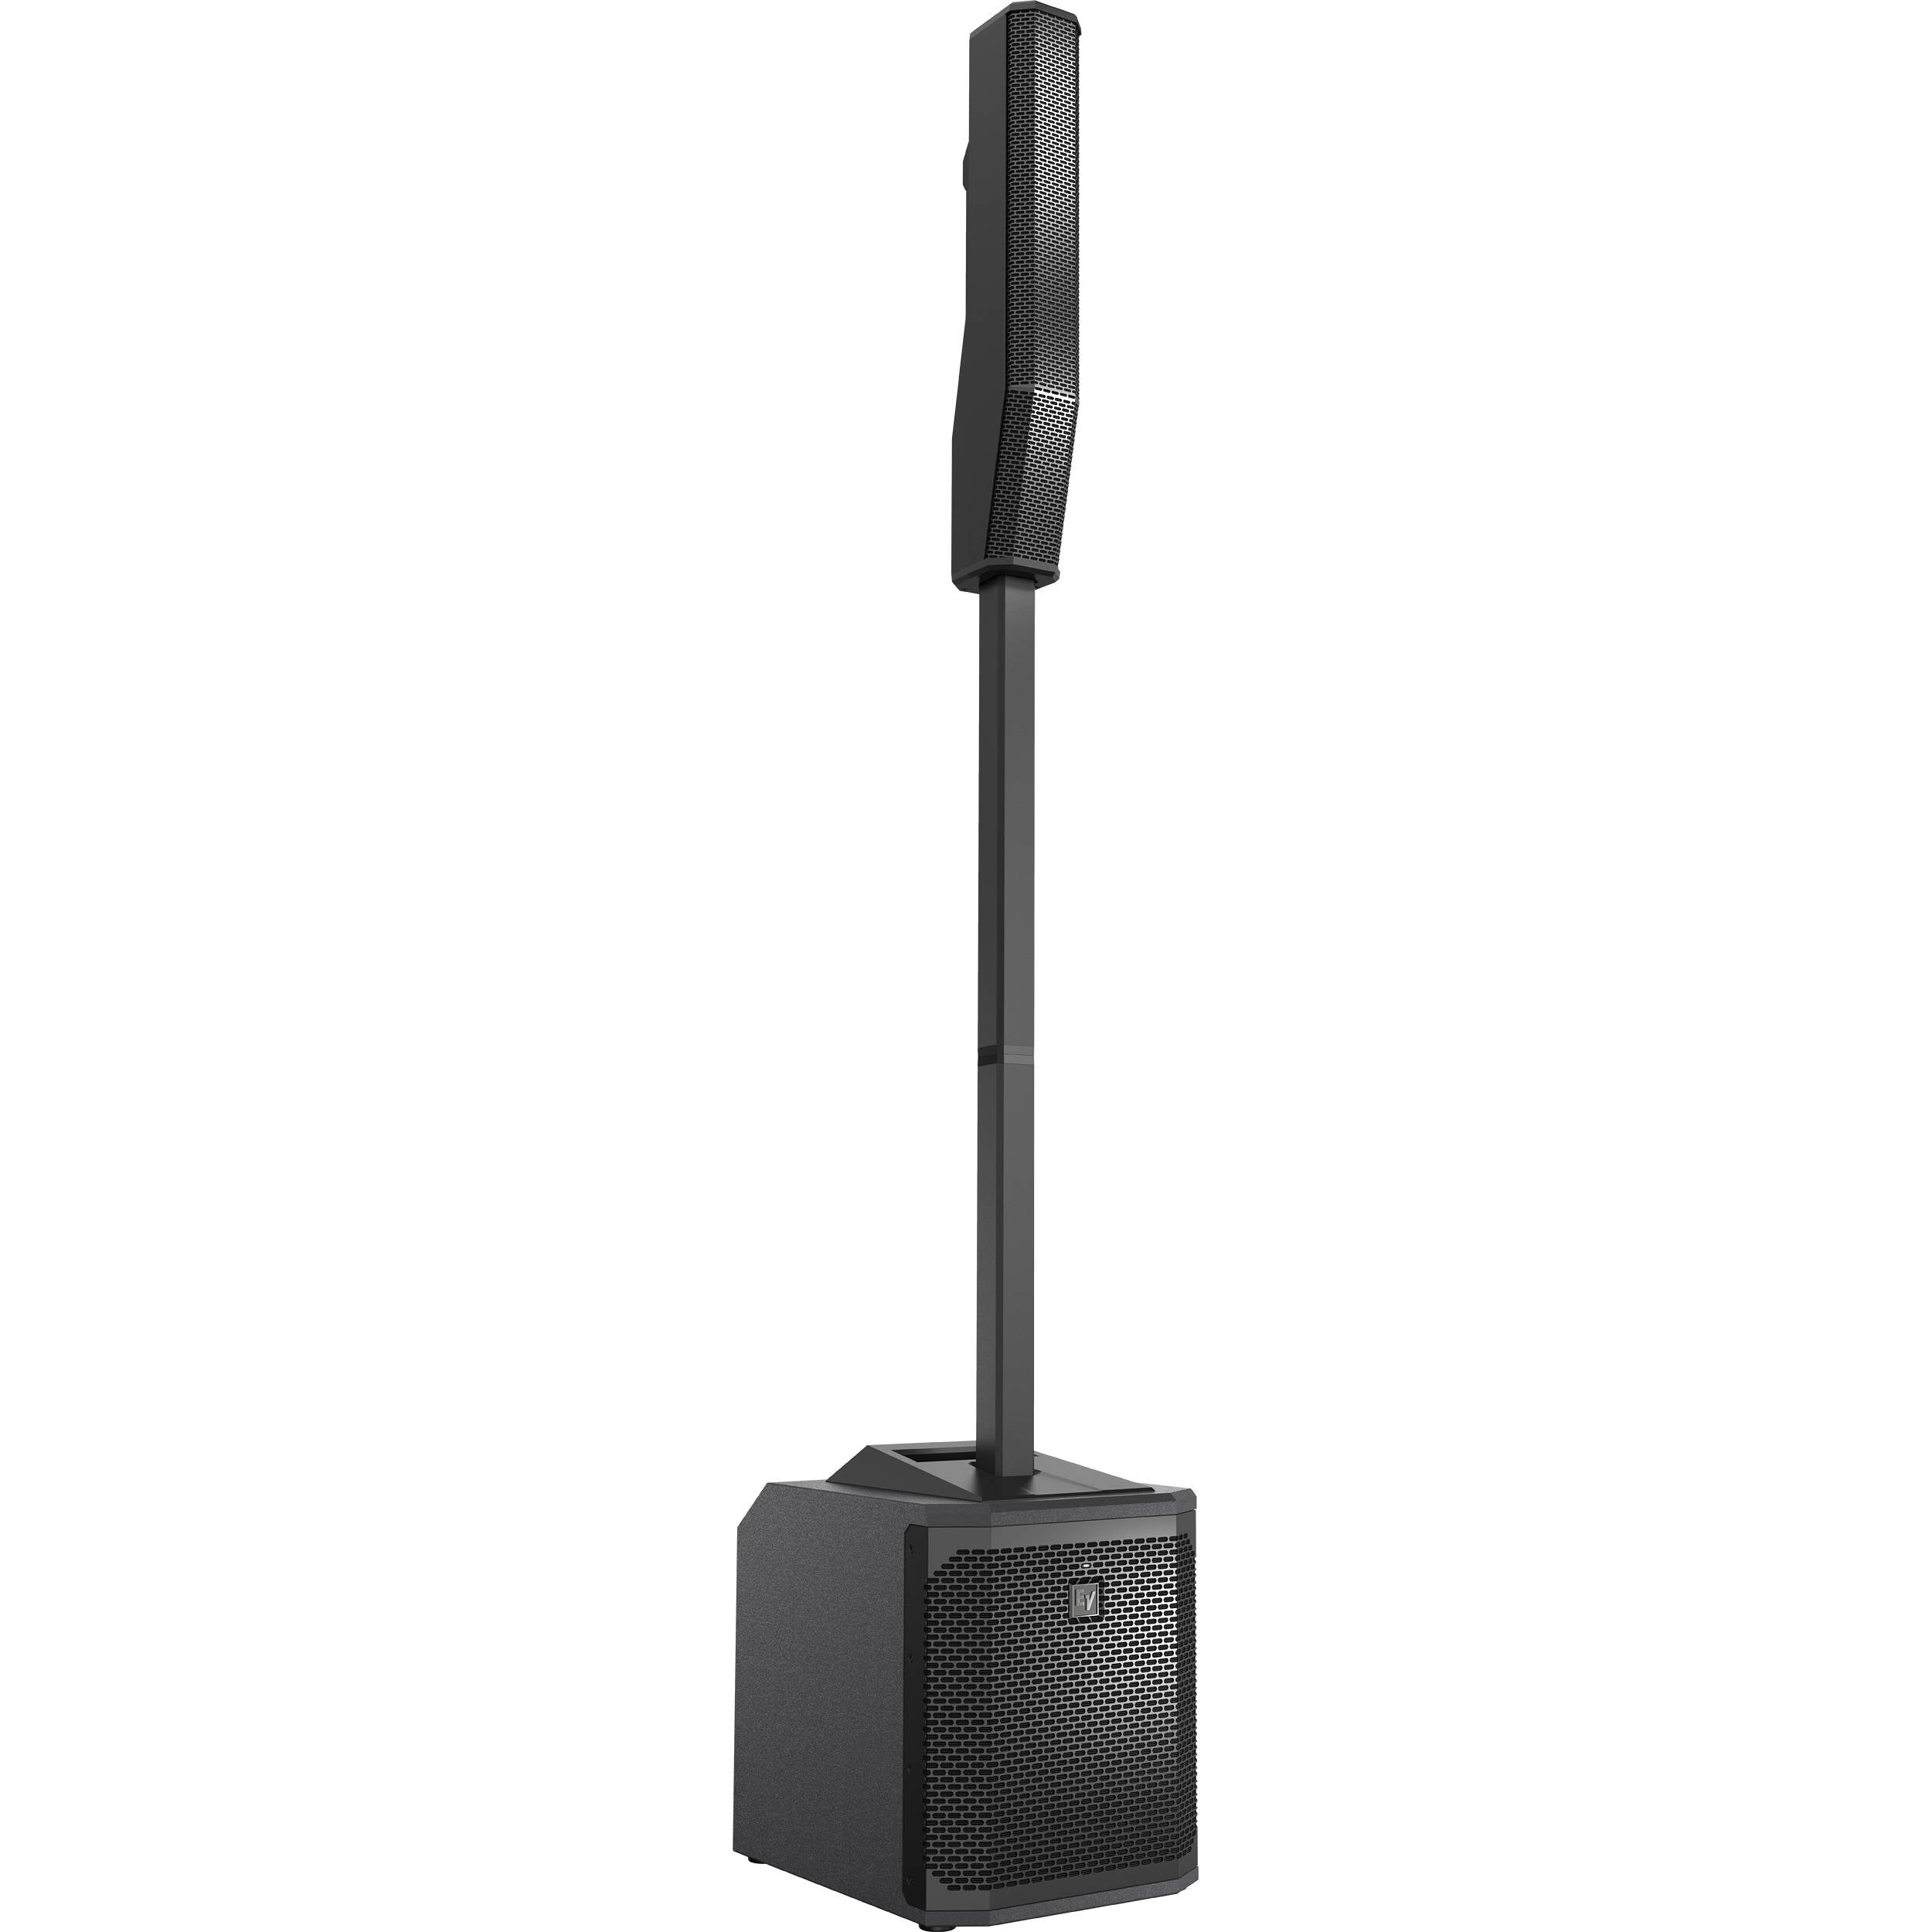 EV Electro-Voice Evolve 30M Powered Column Loudspeaker System - Black